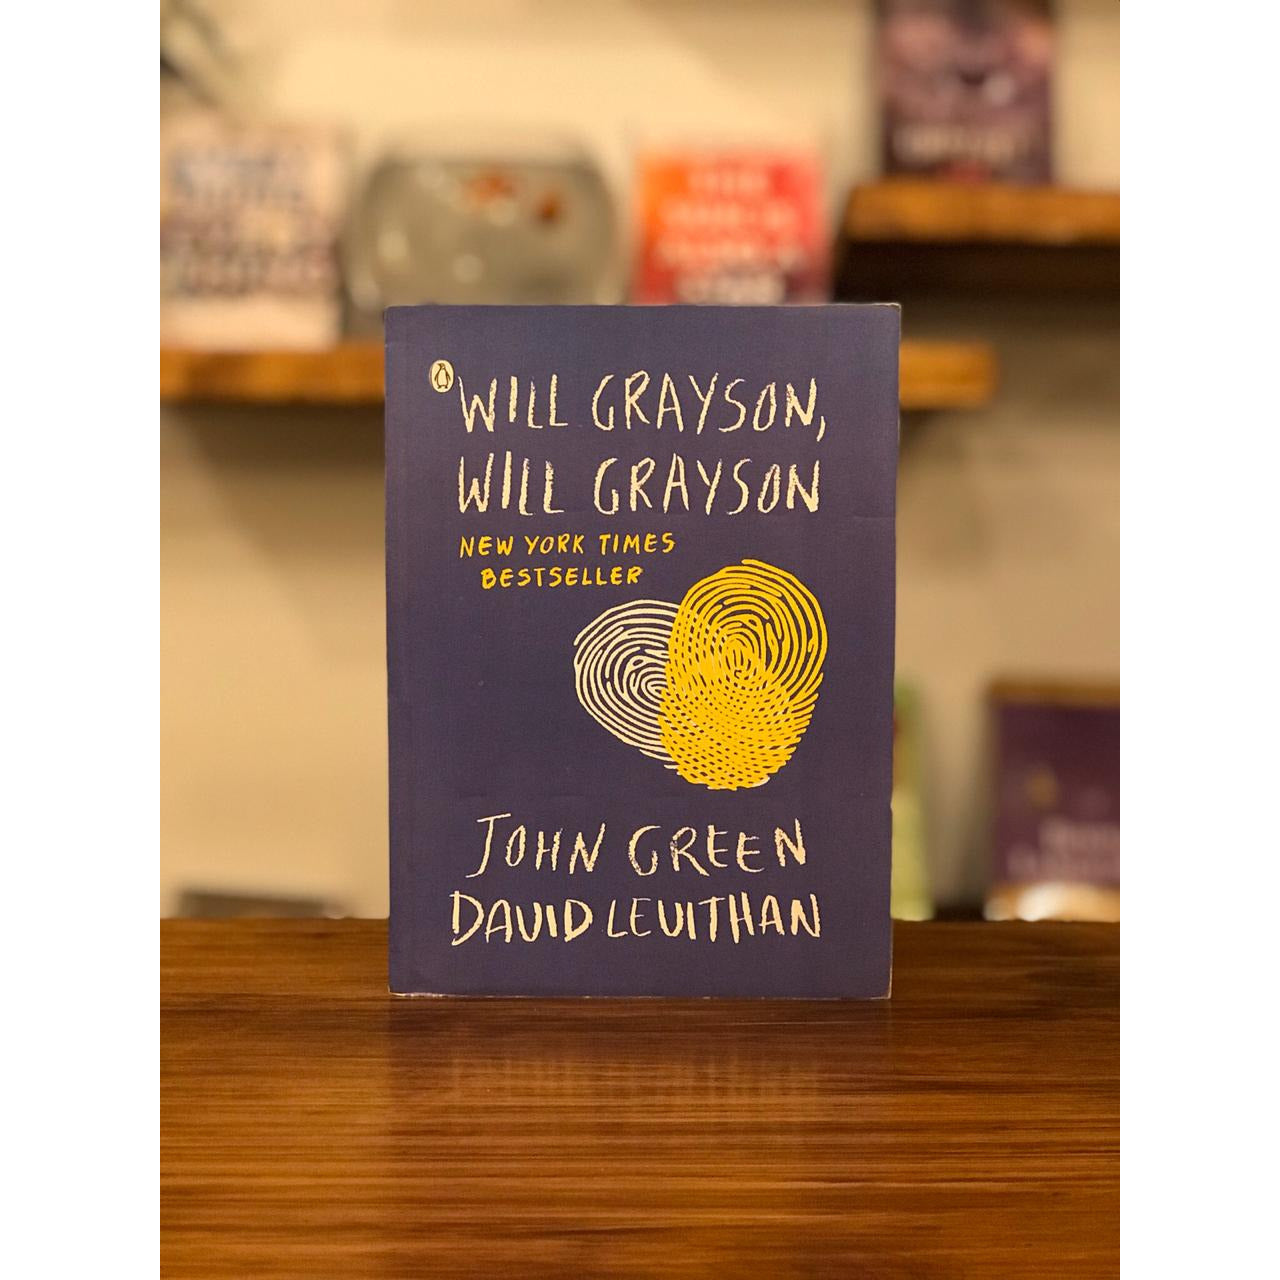 Will grayson By John Green